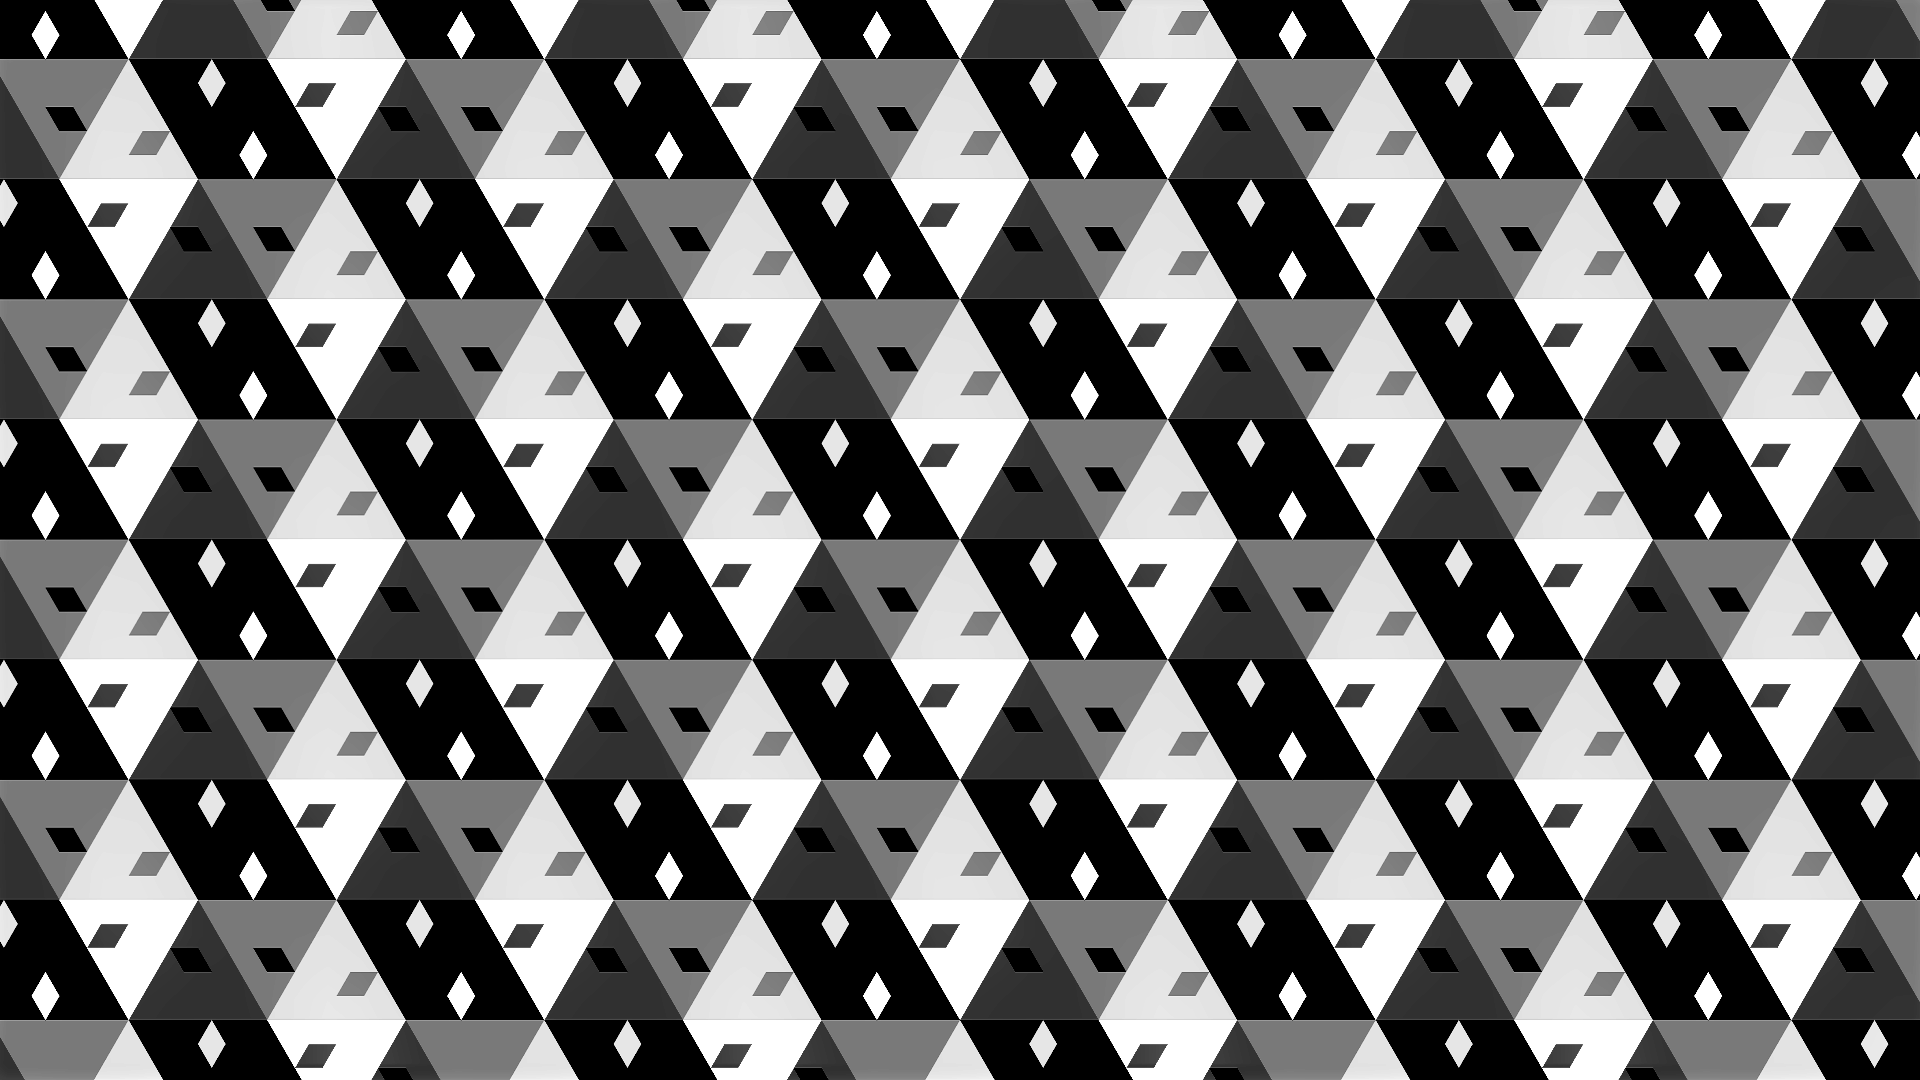 Triangle Square Artistic Digital Art Hexagon 1920x1080